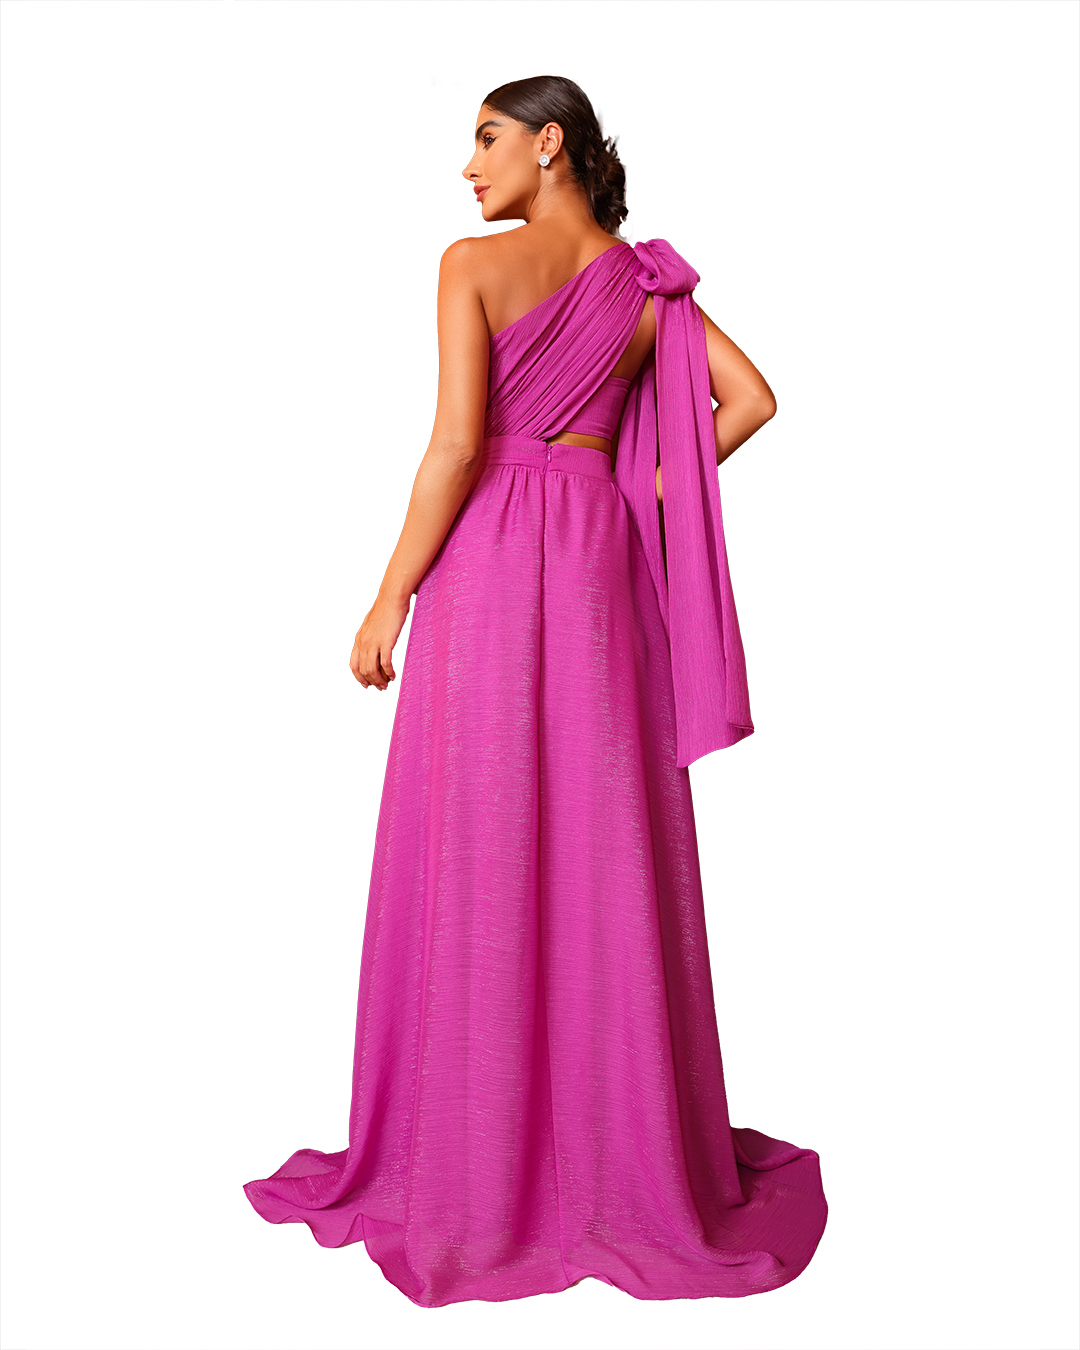 Dot Clothing - Vestido Dot Clothing Longo com Top Pink - 1868PINK